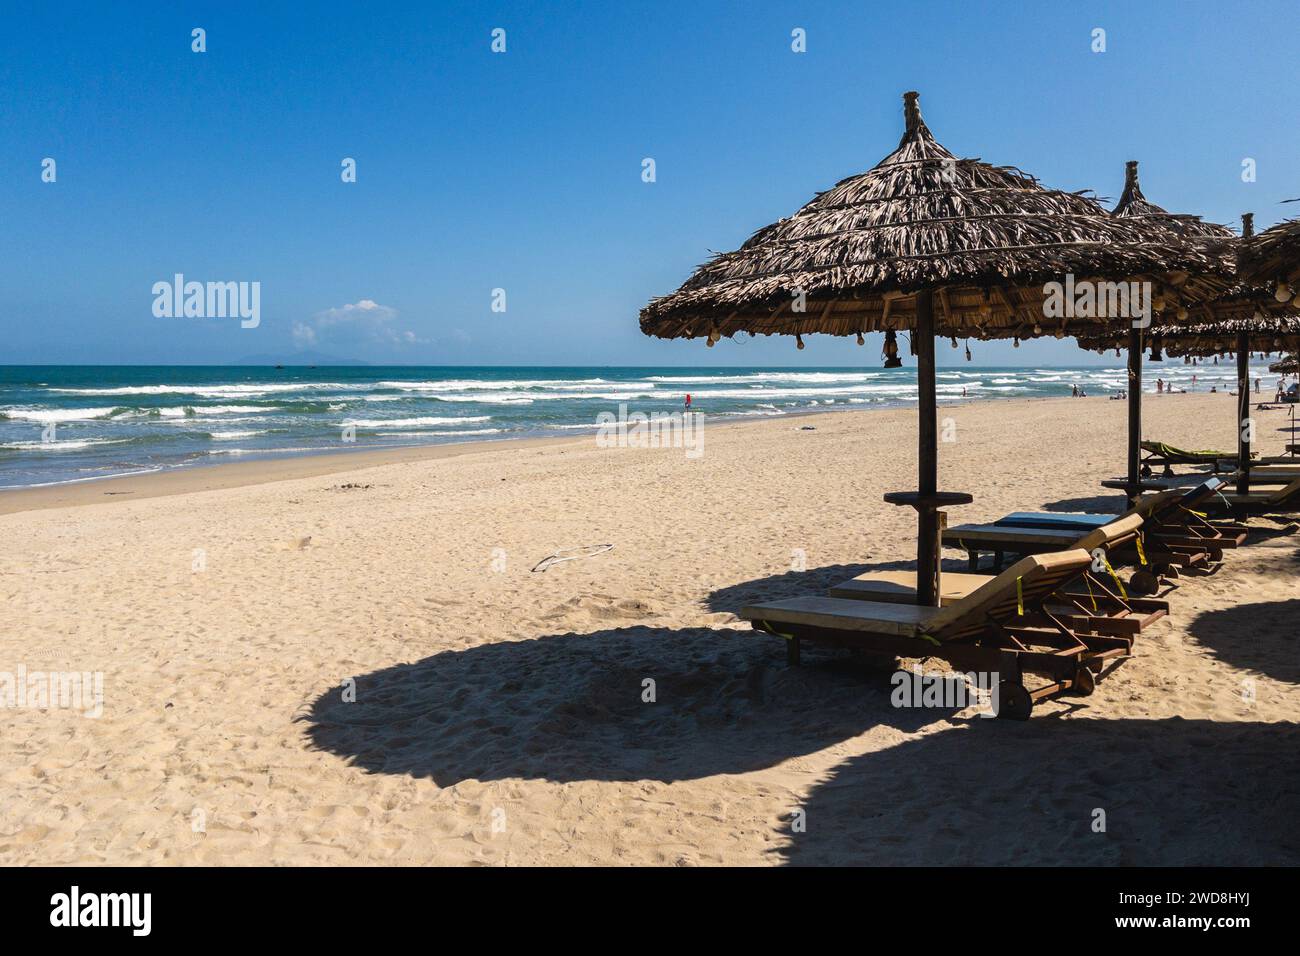 Scenery of My Khe Beach located in Da Nang, central Vietnam Stock Photo